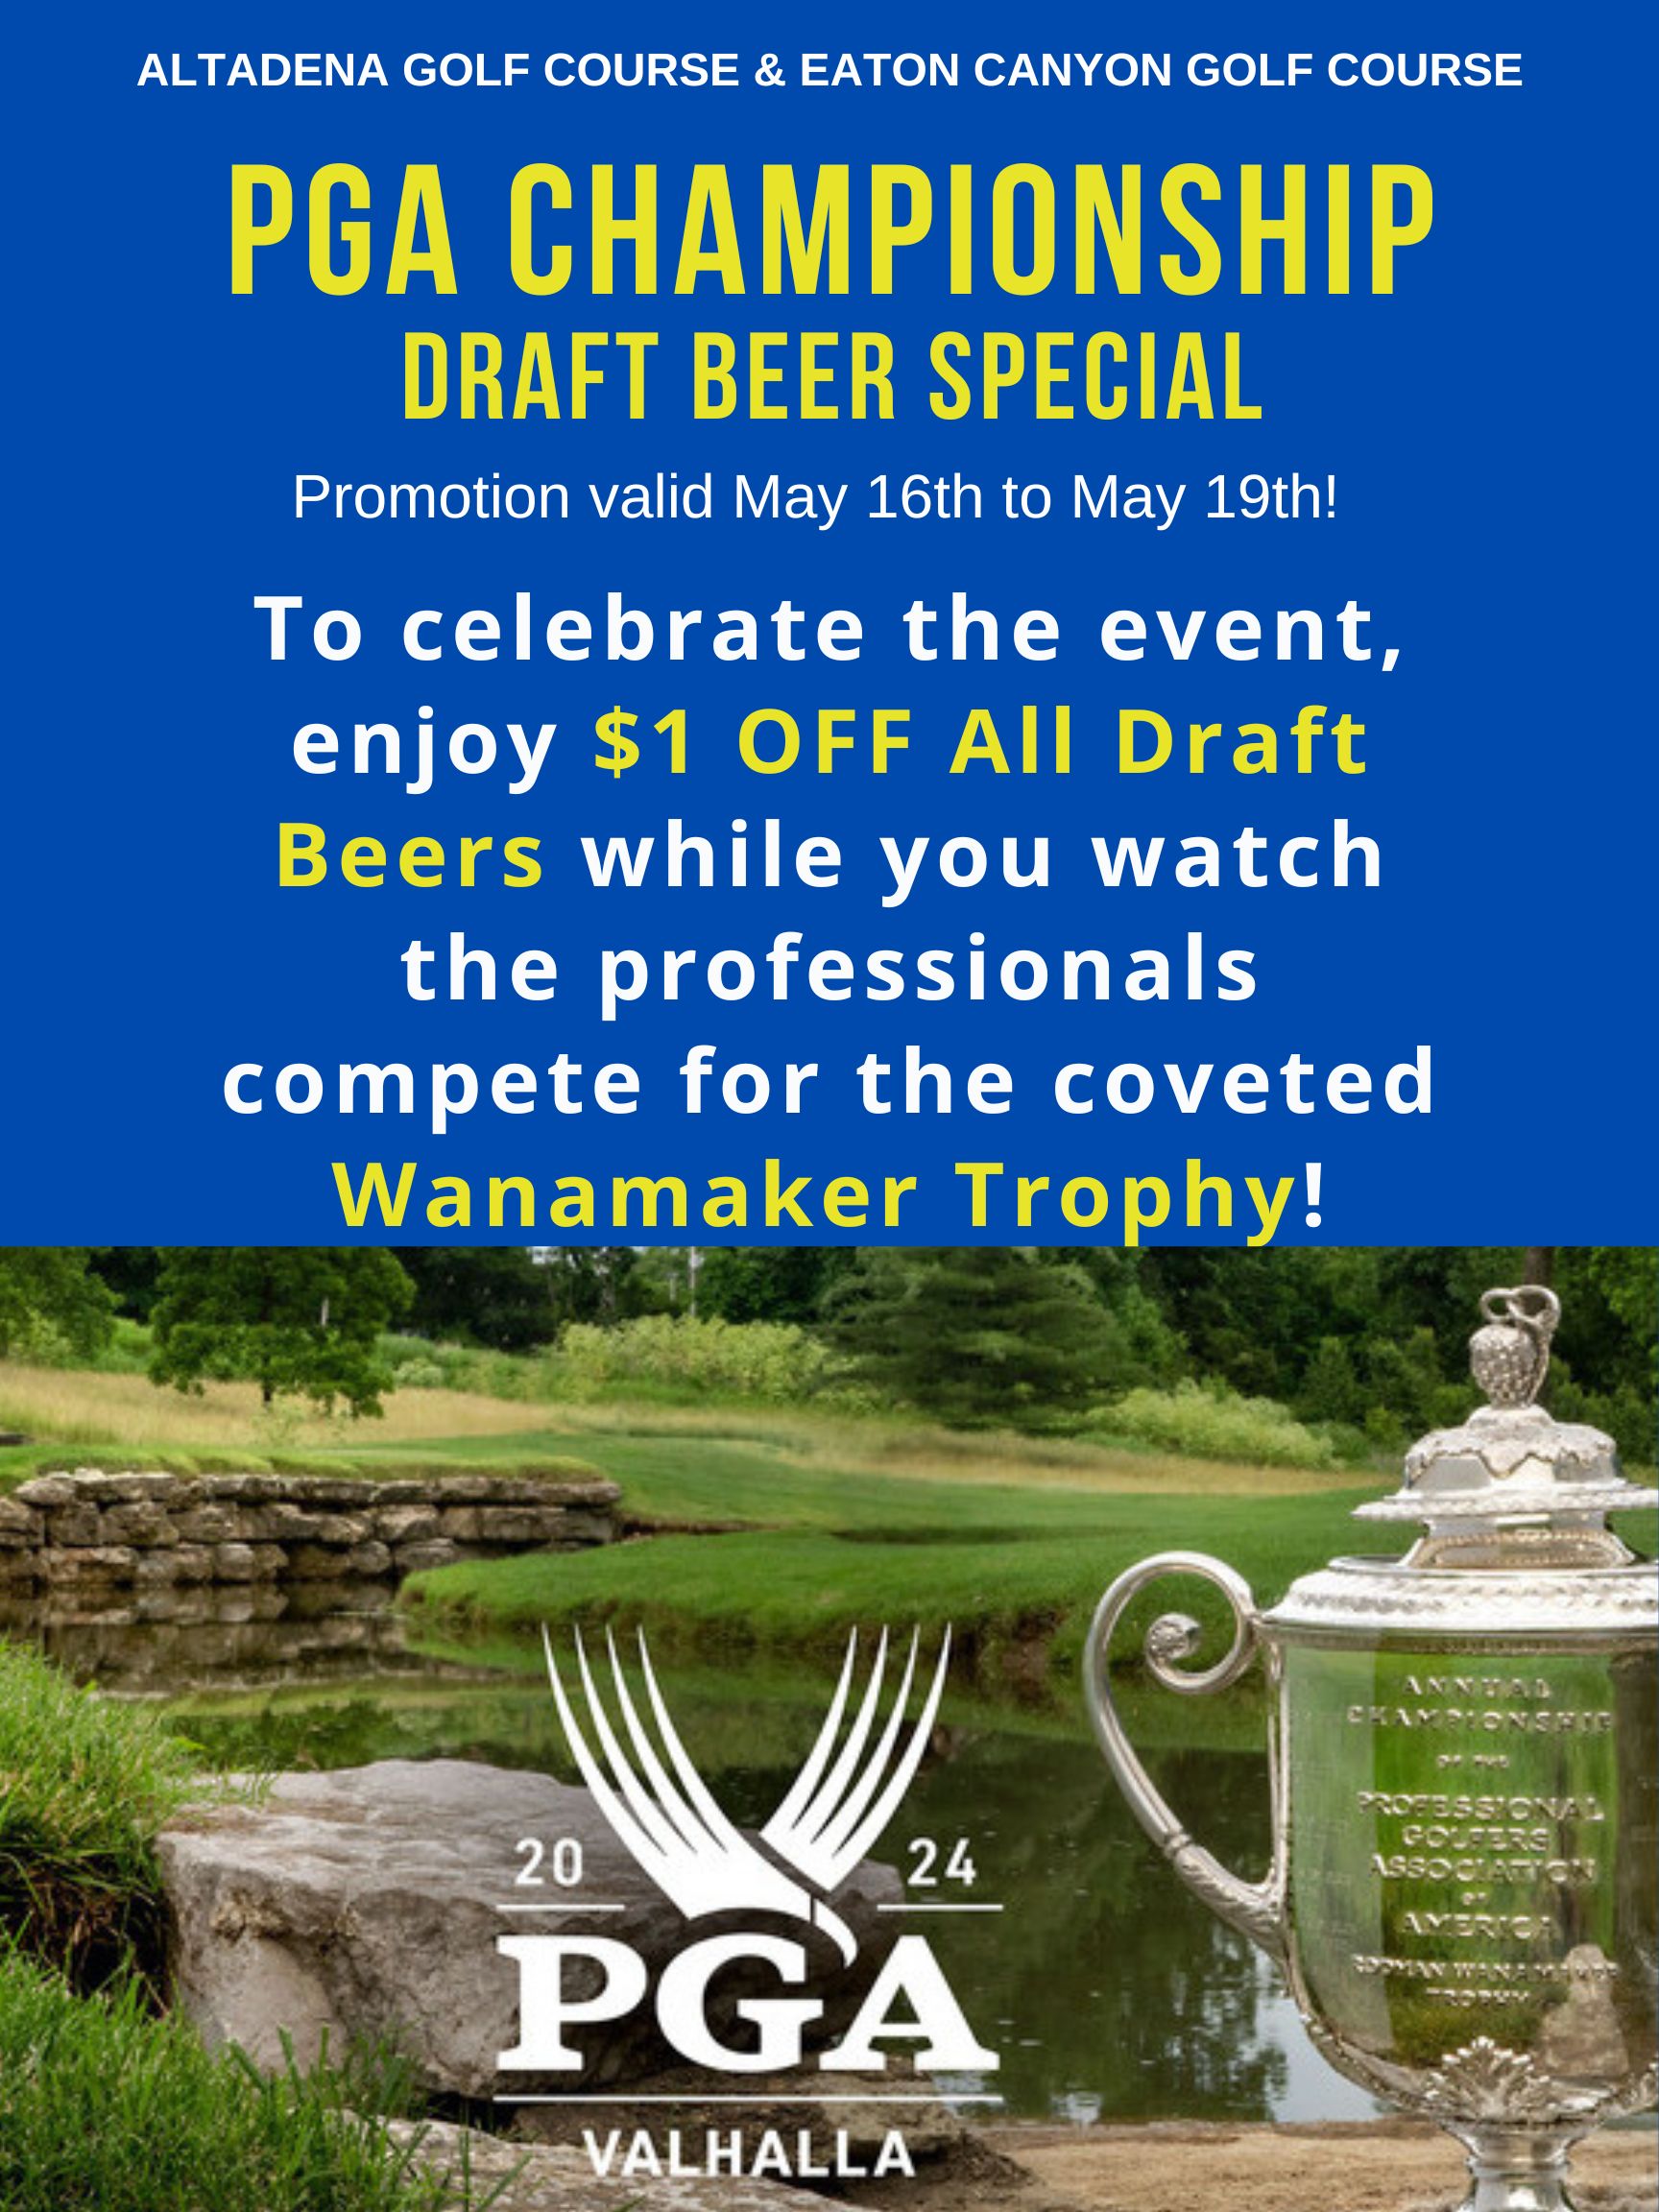 Masters Draft Beer Special